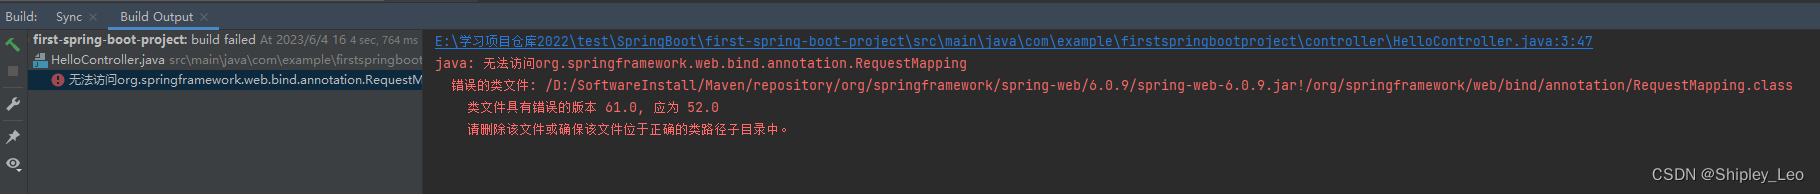 java: 无法访问org.springframework.web.bind.annotation.RequestMapping......类文件具有错误的版本 61.0, 应为 52.0